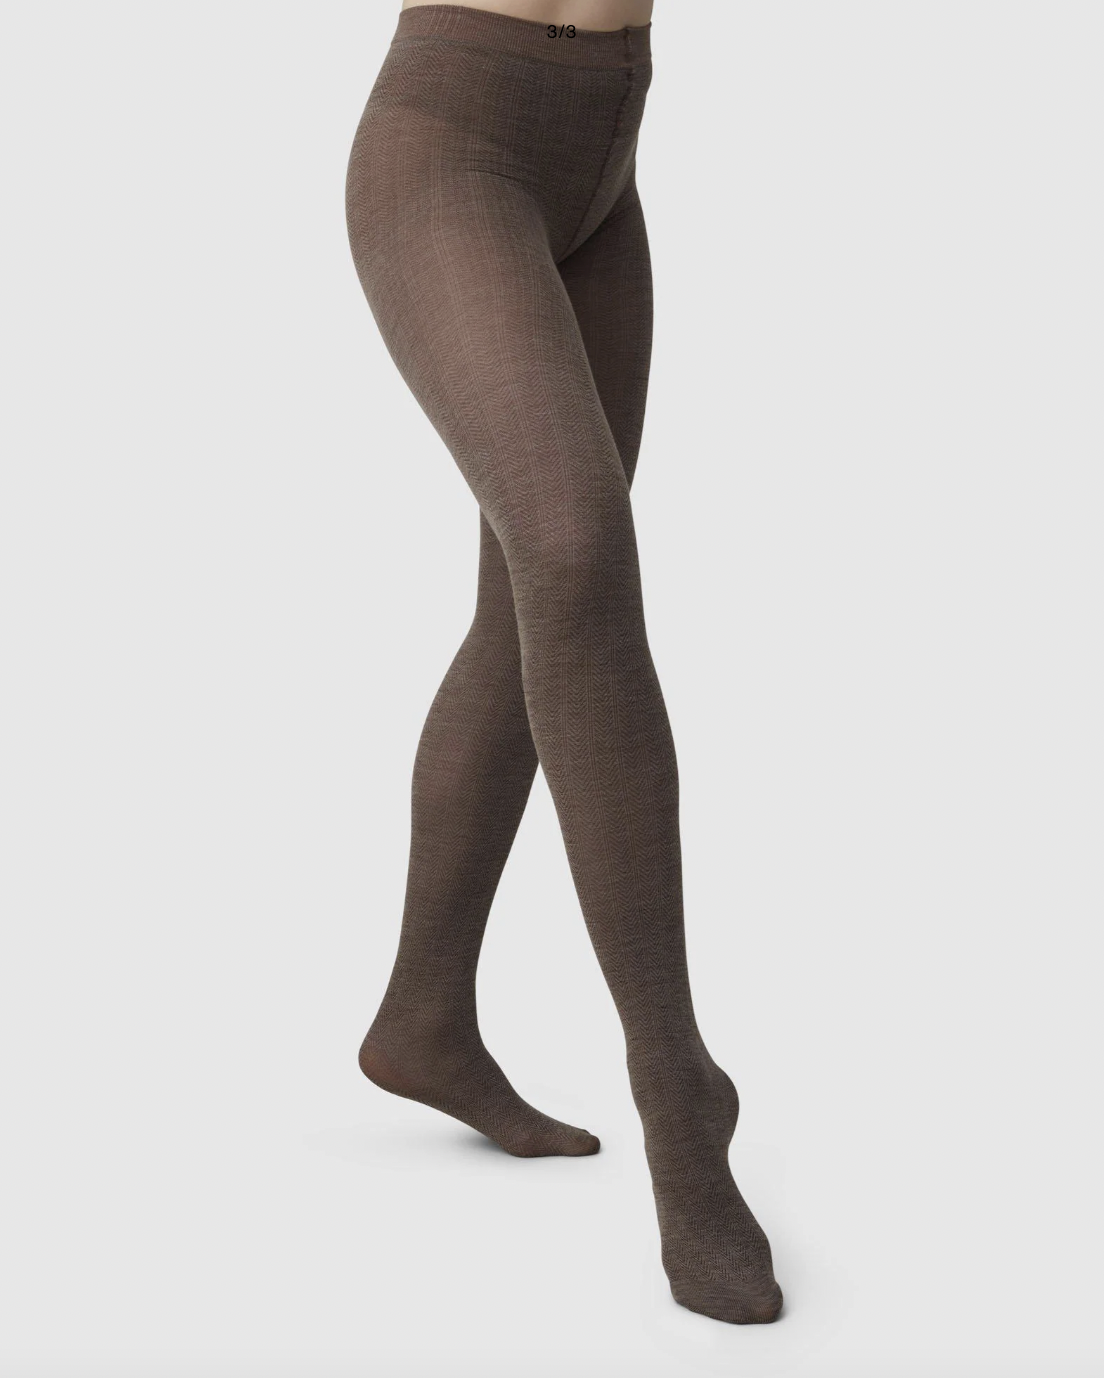 Swedish Stockings Olivia Premium 60 Denier Tights: Best Black Tights  According to NY Times